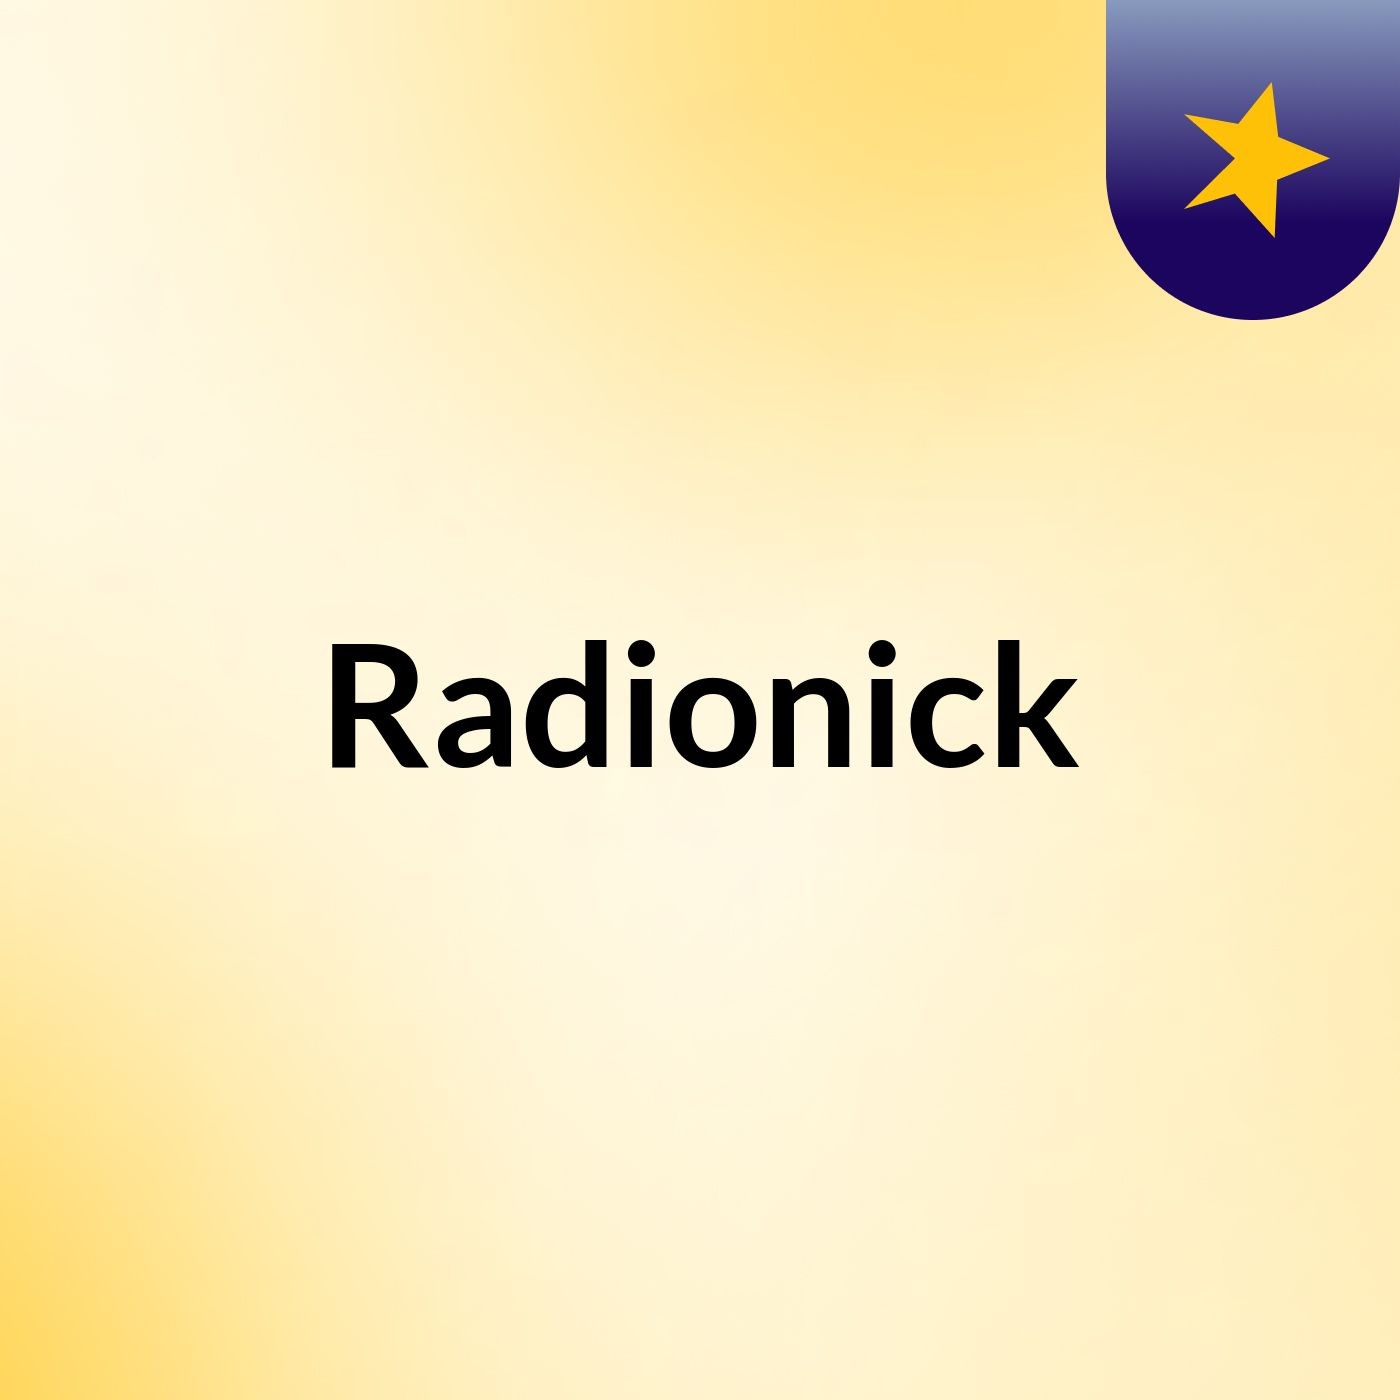 Radionick